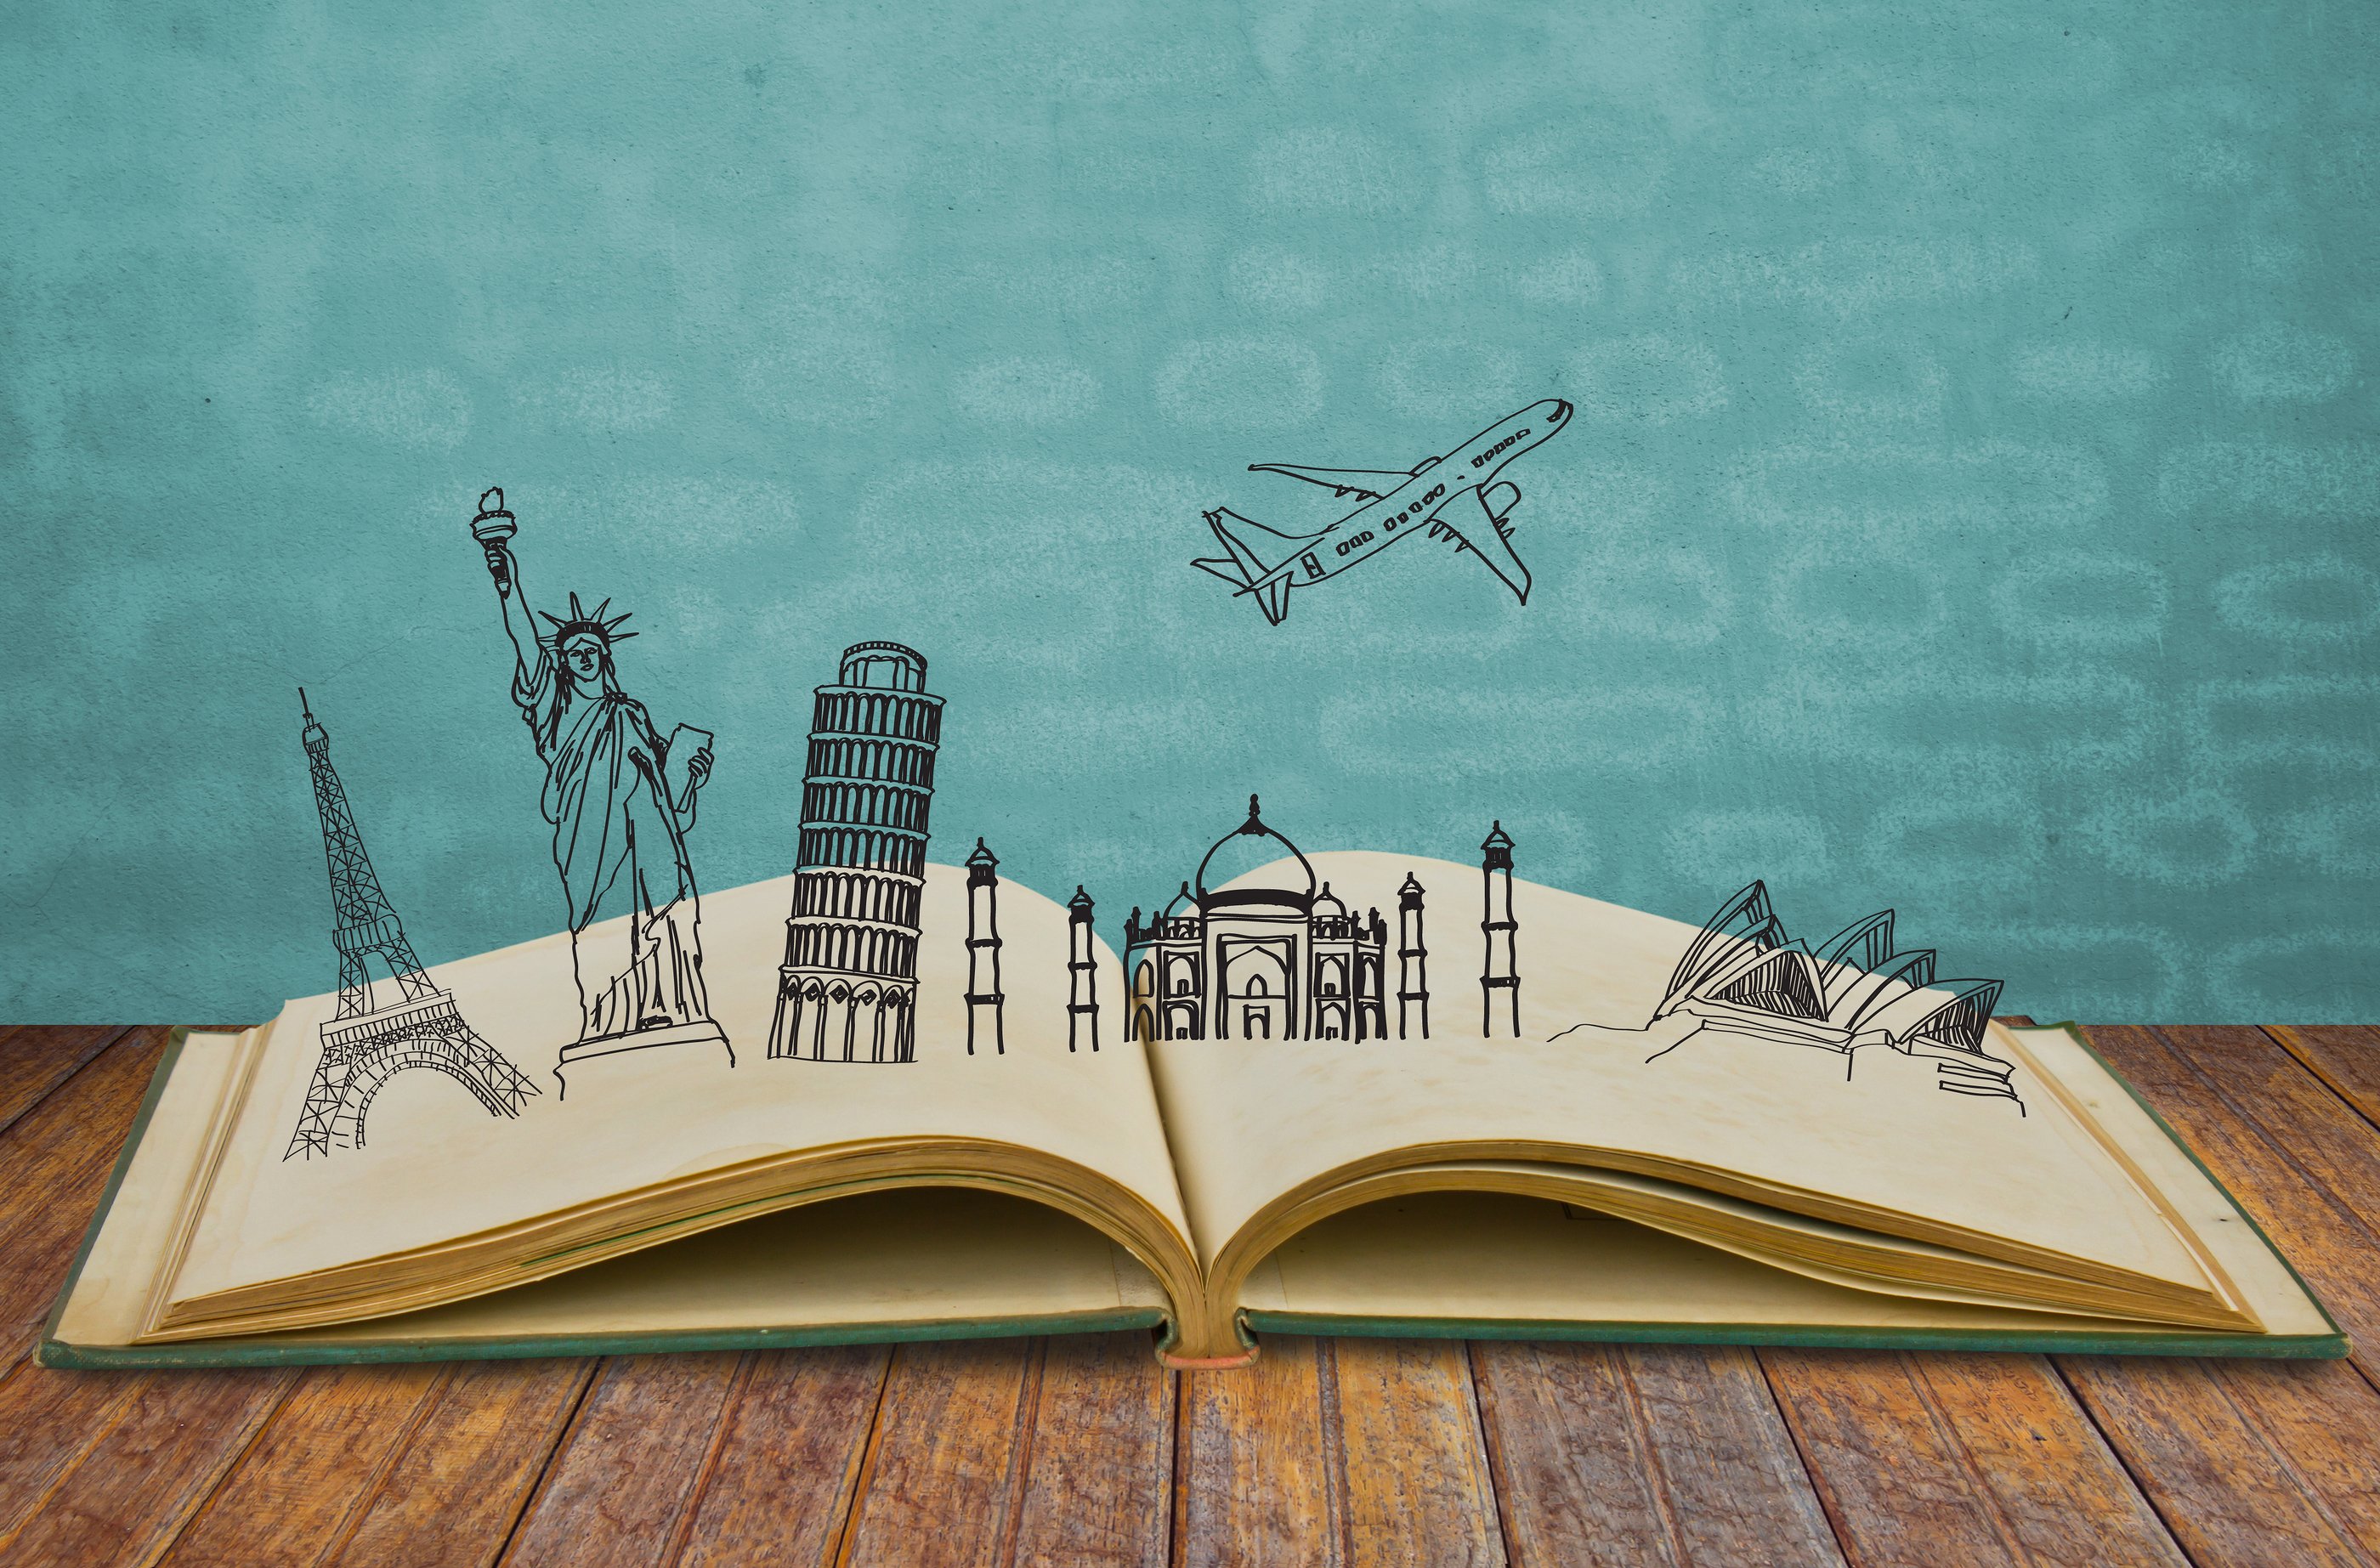 Book is about travelling. Литературные путешествия. Путешествие иллюстрация. Креативные путешествия. Книга путешествия.